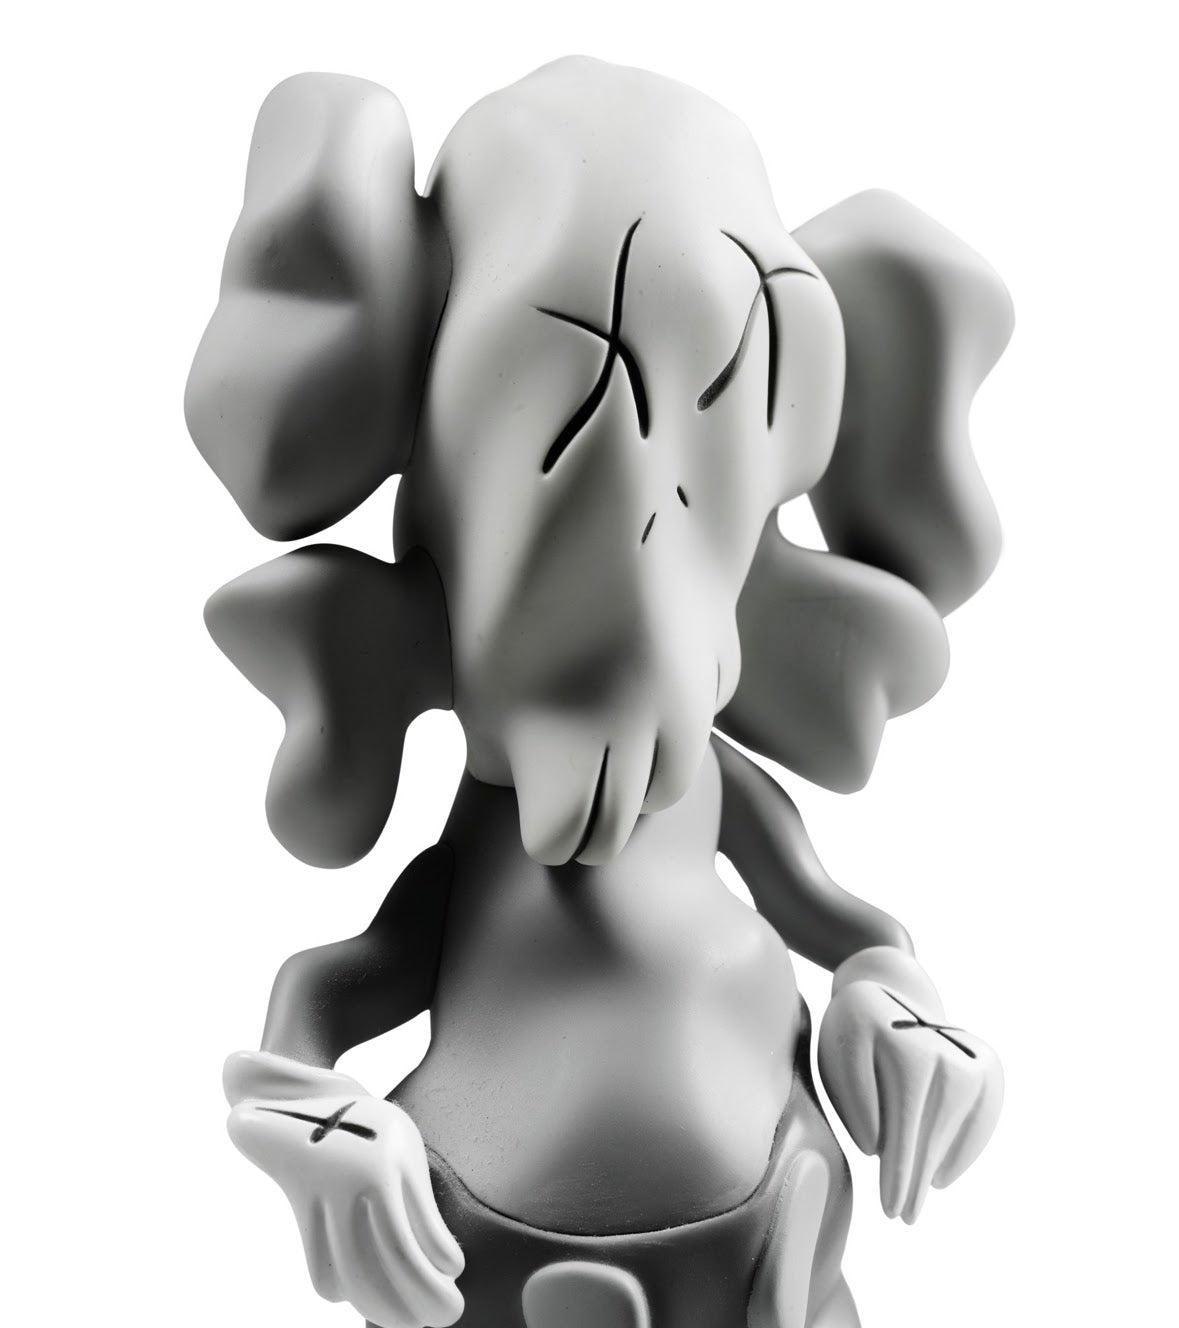 KAWS x Robert Lazzarini Distorted Companion Figure "Grey"